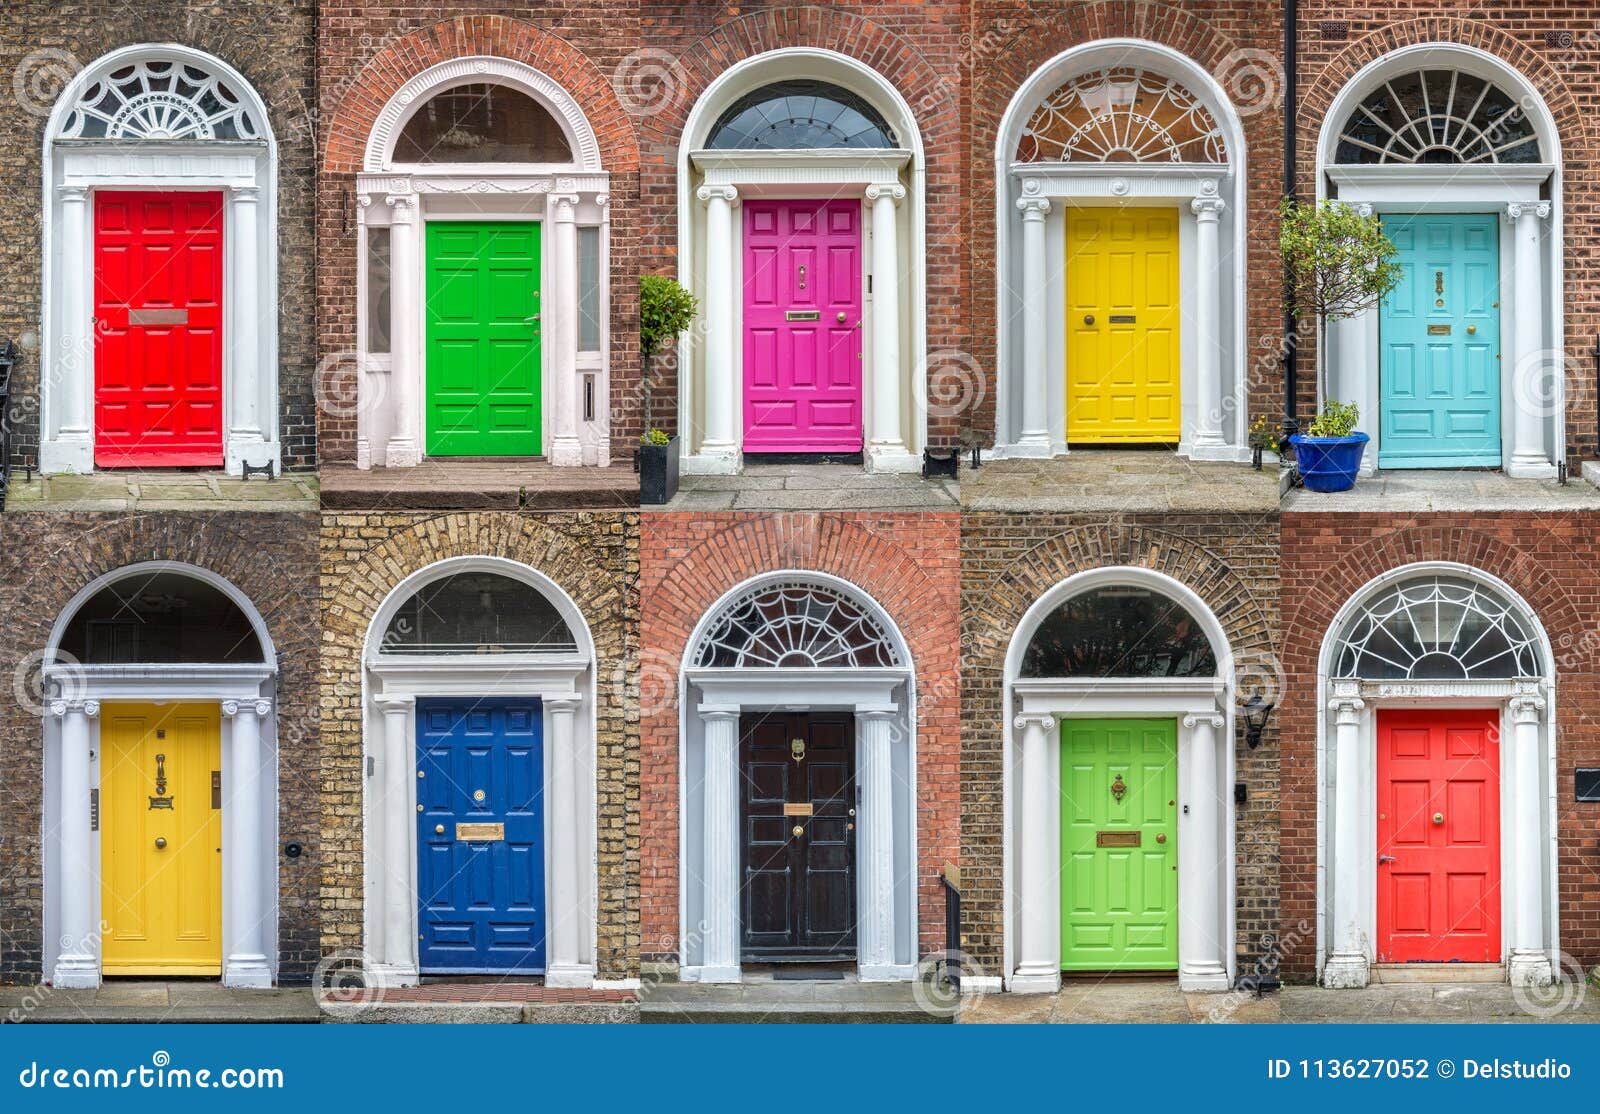 1,068 Doors Ireland Photos - Free & Royalty-Free Stock Photos from  Dreamstime